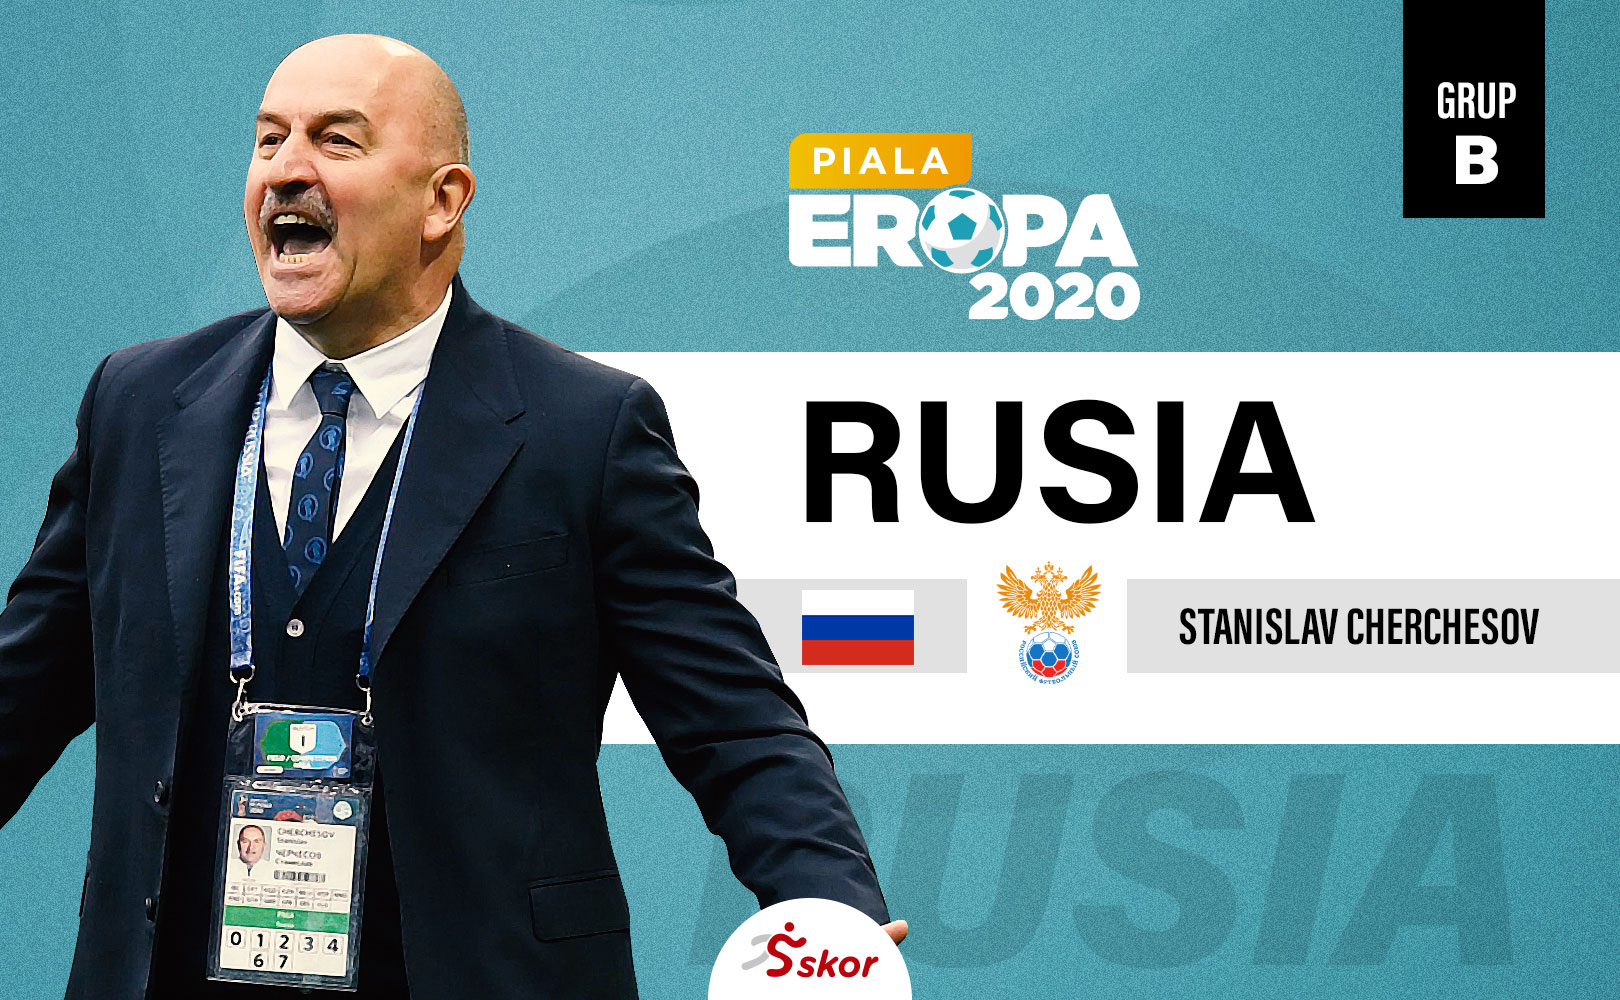 Profil Tim Piala Eropa 2020 - Rusia: Beruang yang Coba Masuk ke Dalam Lingkaran